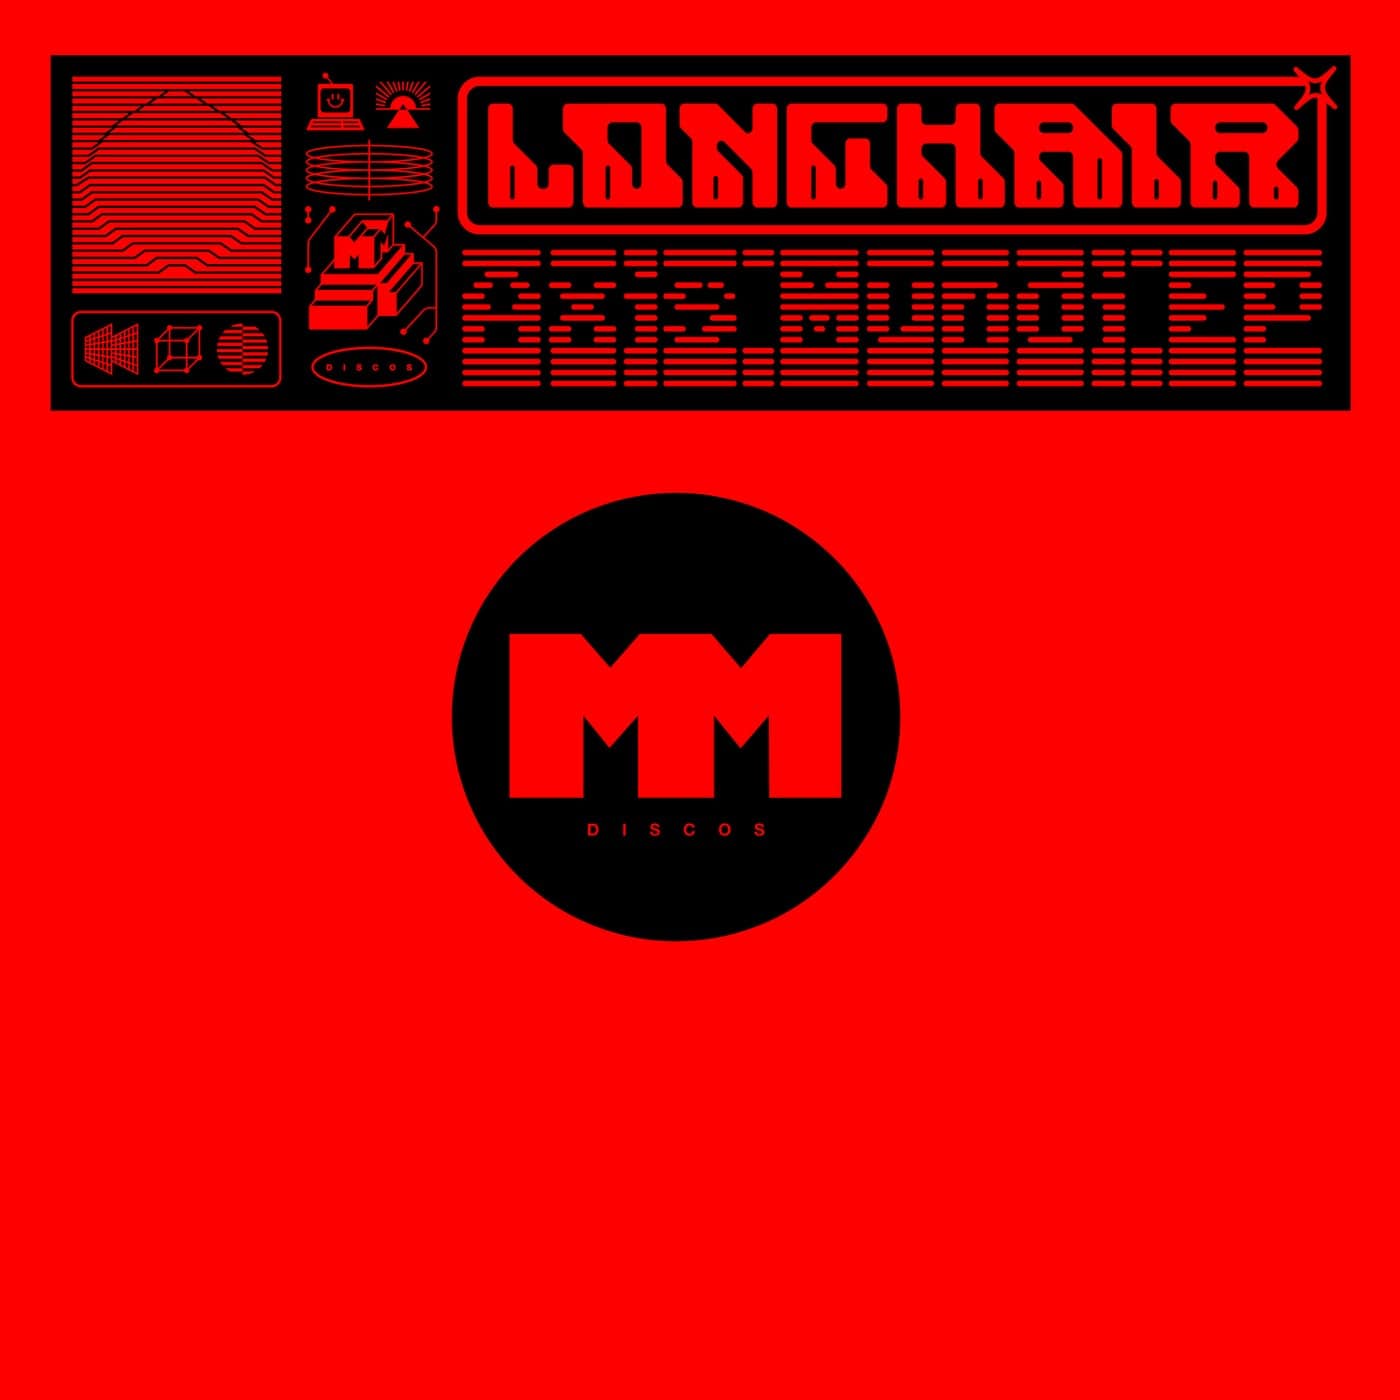 Download Longhair - Axis Mundi on Electrobuzz